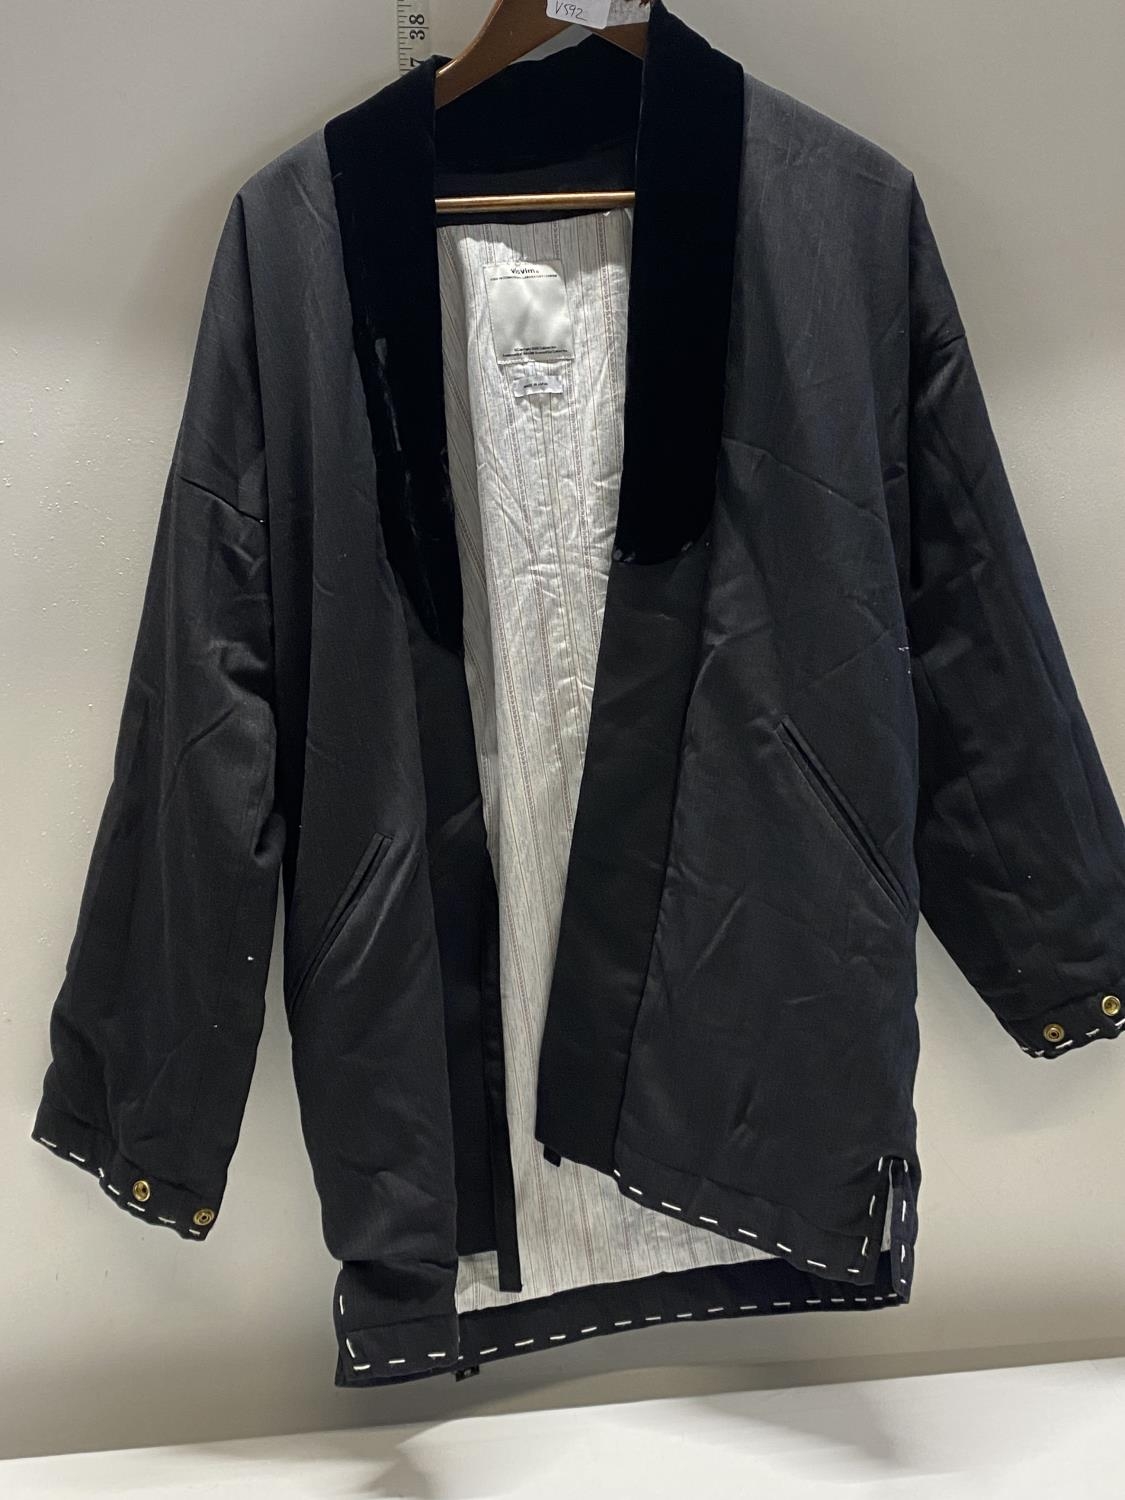 A ladies Japanese style jacket by Visvim